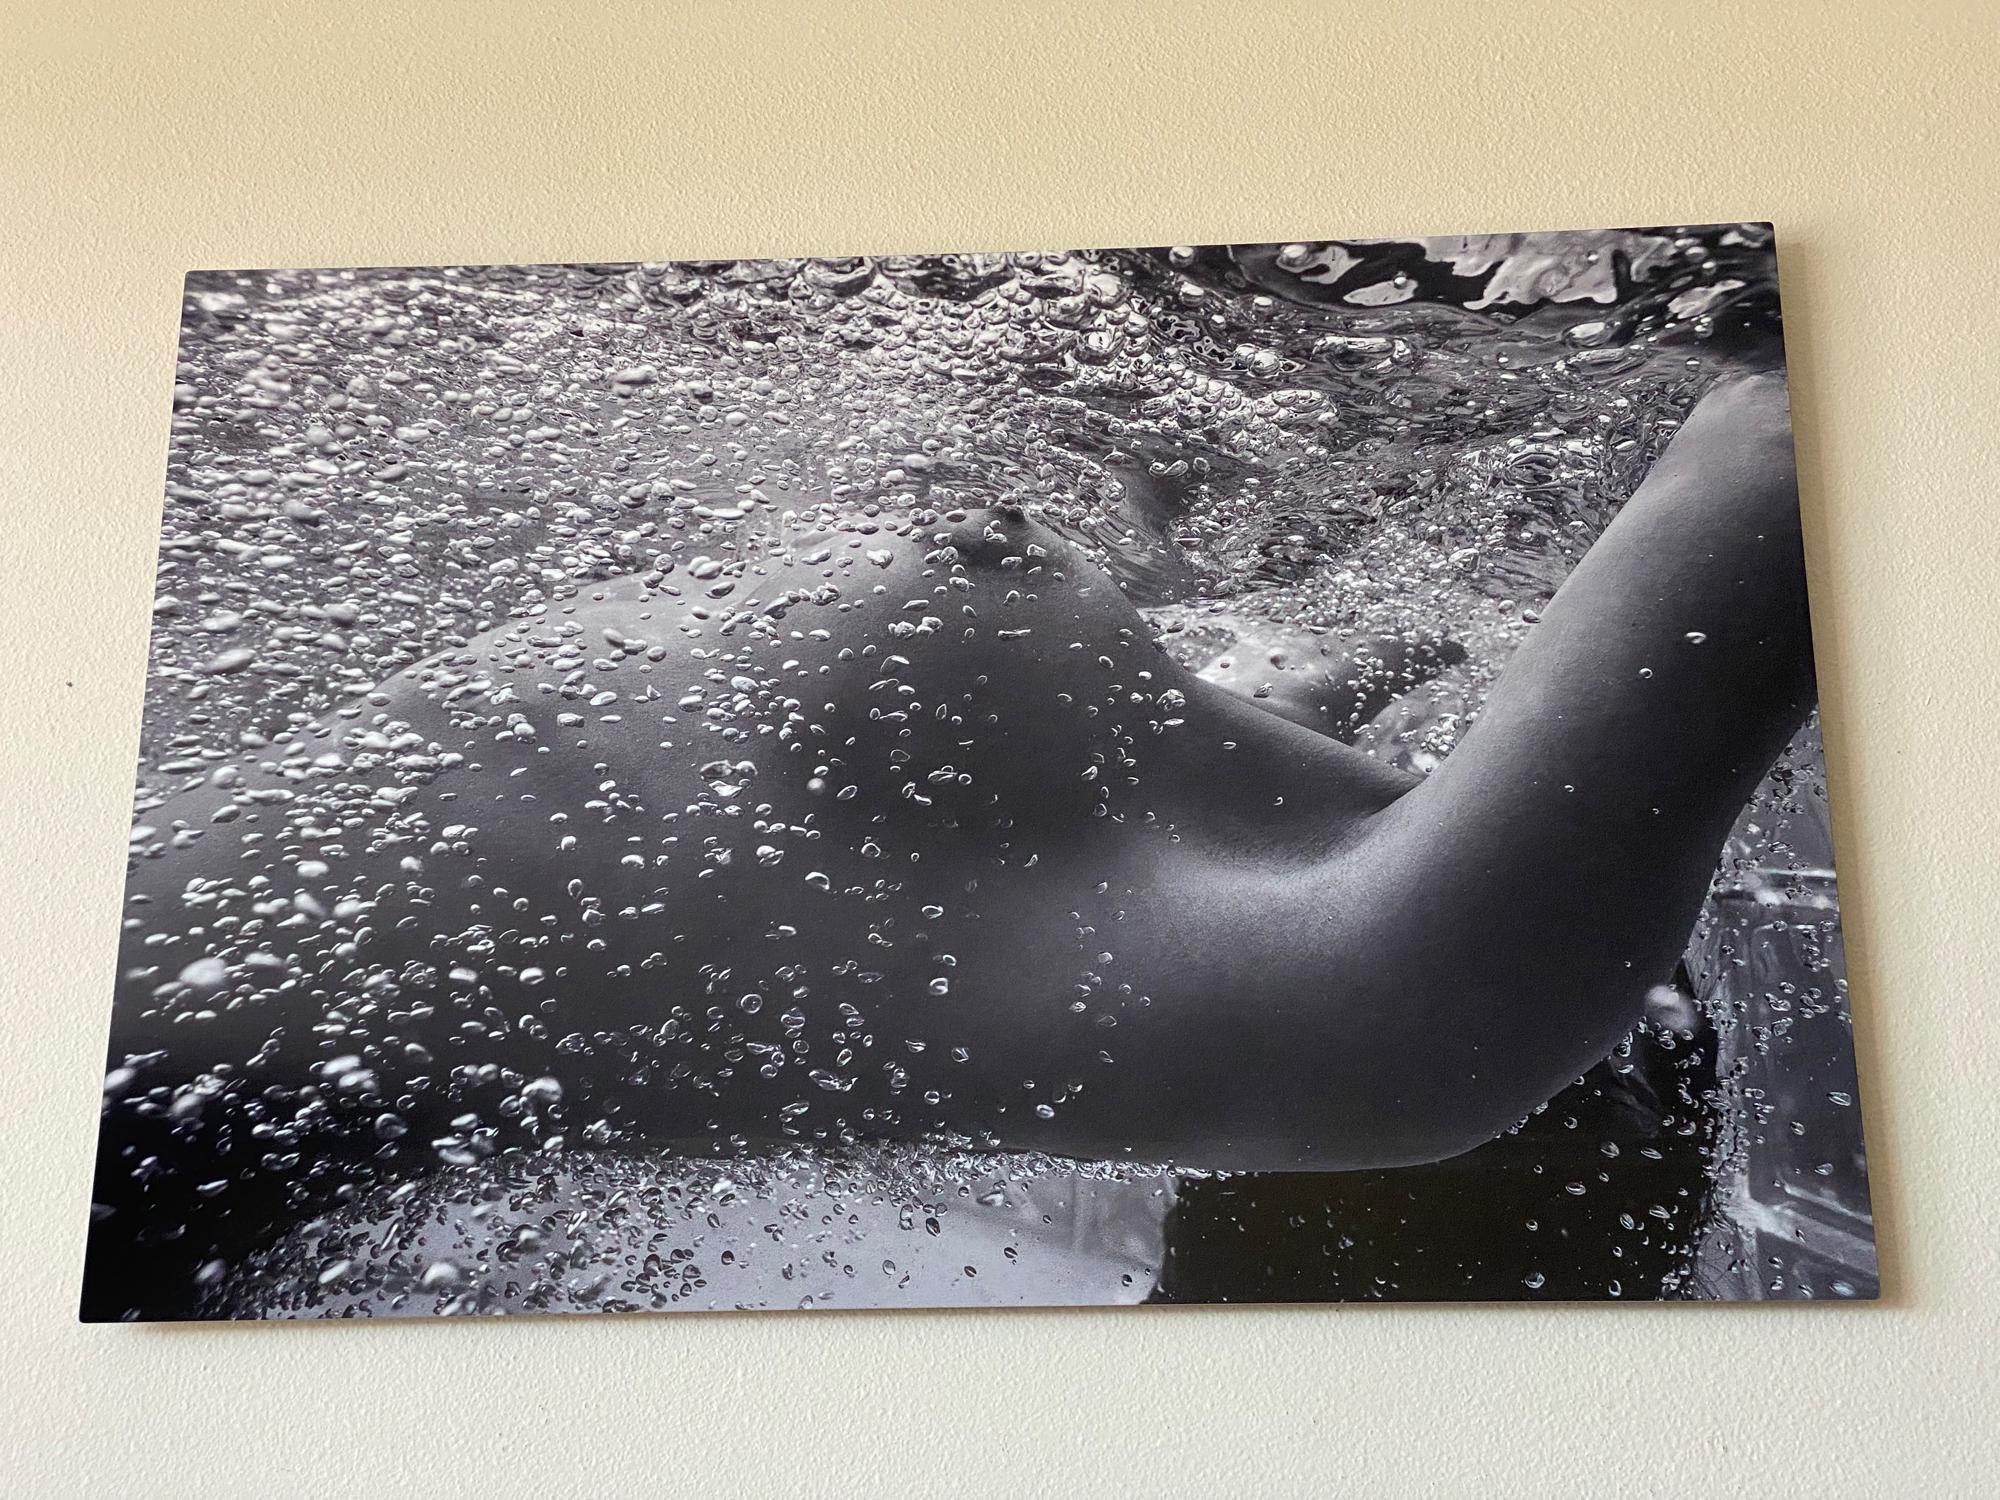 Bubbles - underwater black & white nude photograph - print on aluminum 24 x 36